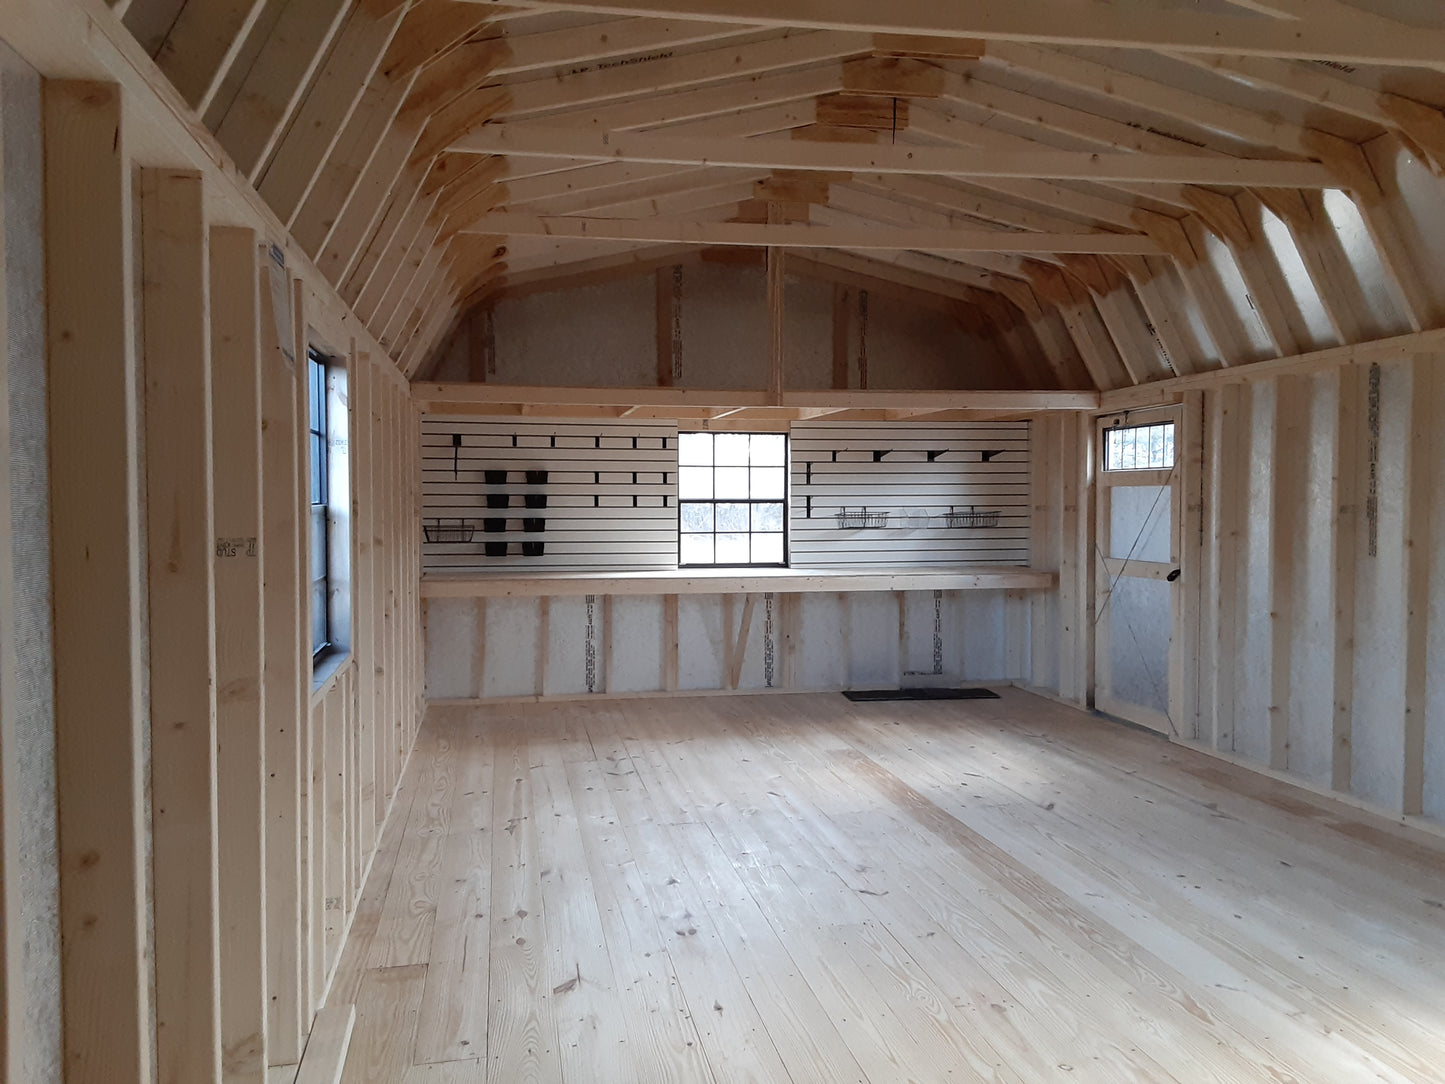 14x28 High Barn Garage with SmartTec Siding